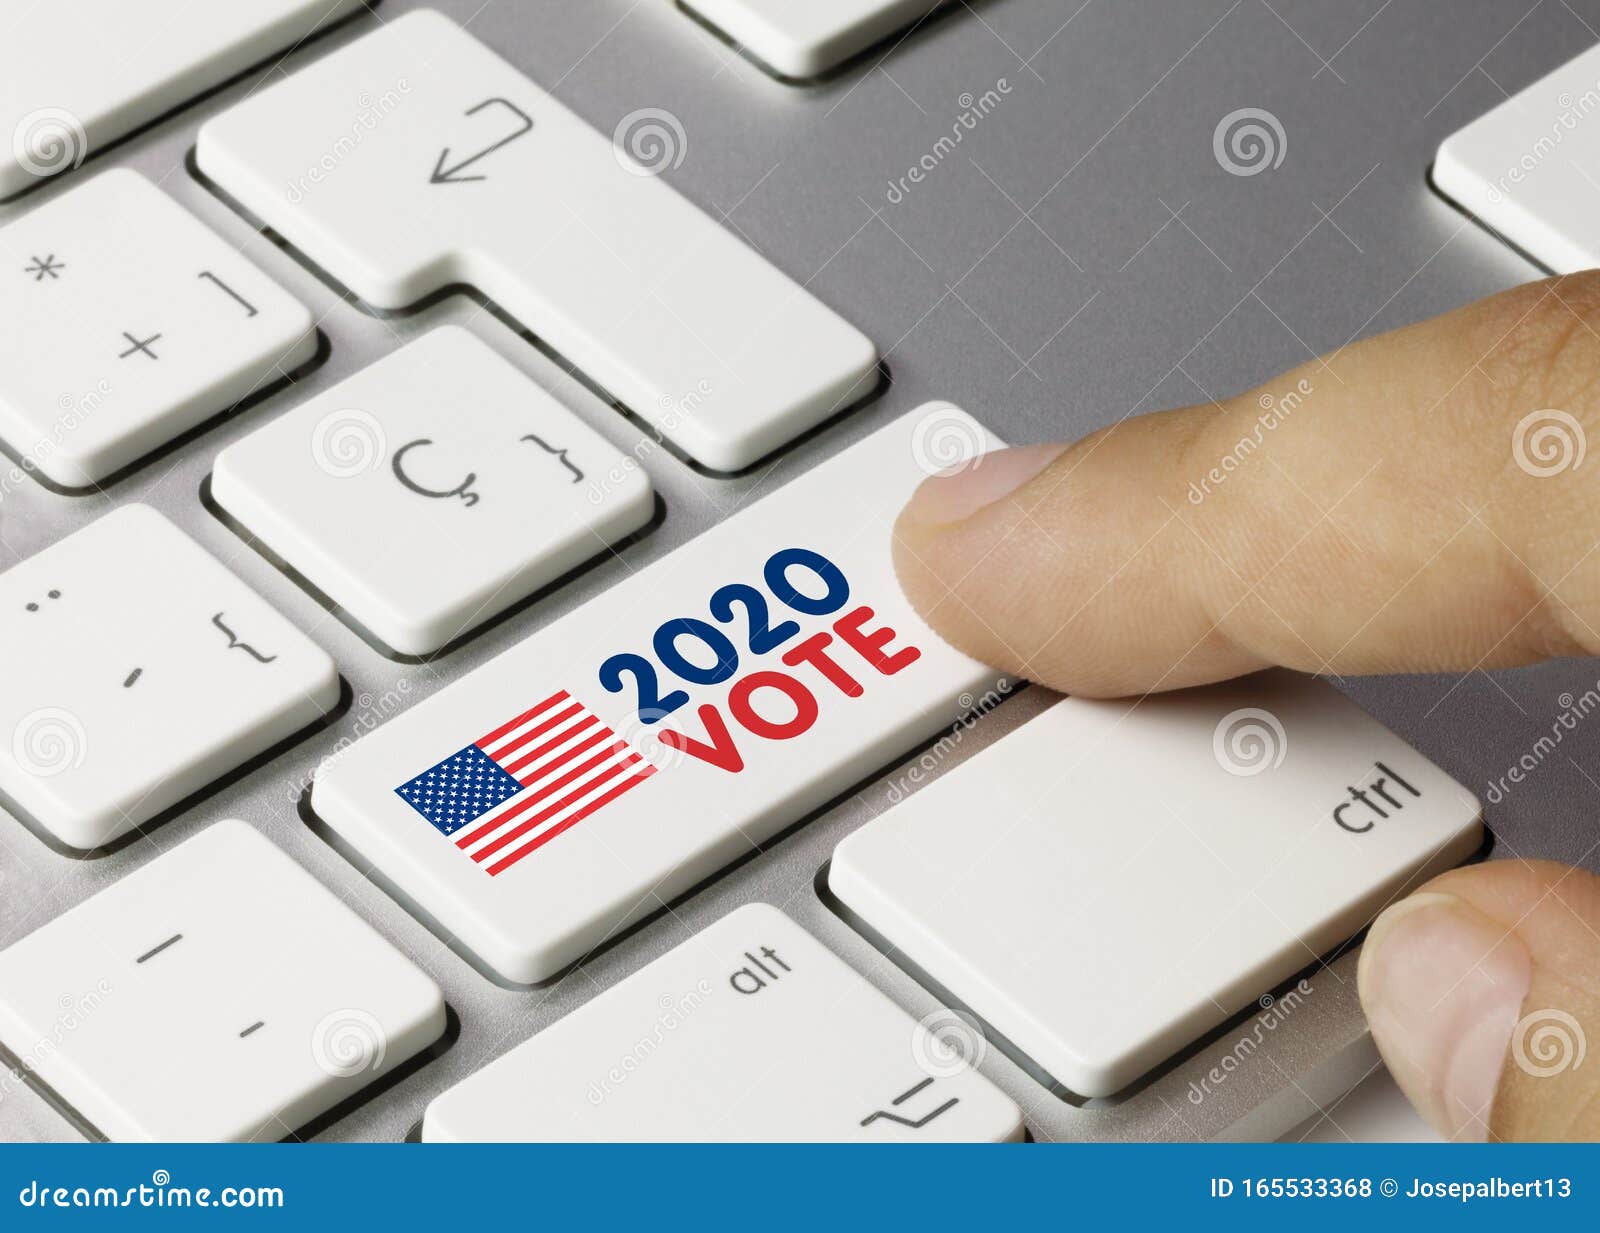 eeuu 2020 vote - inscription on white keyboard key